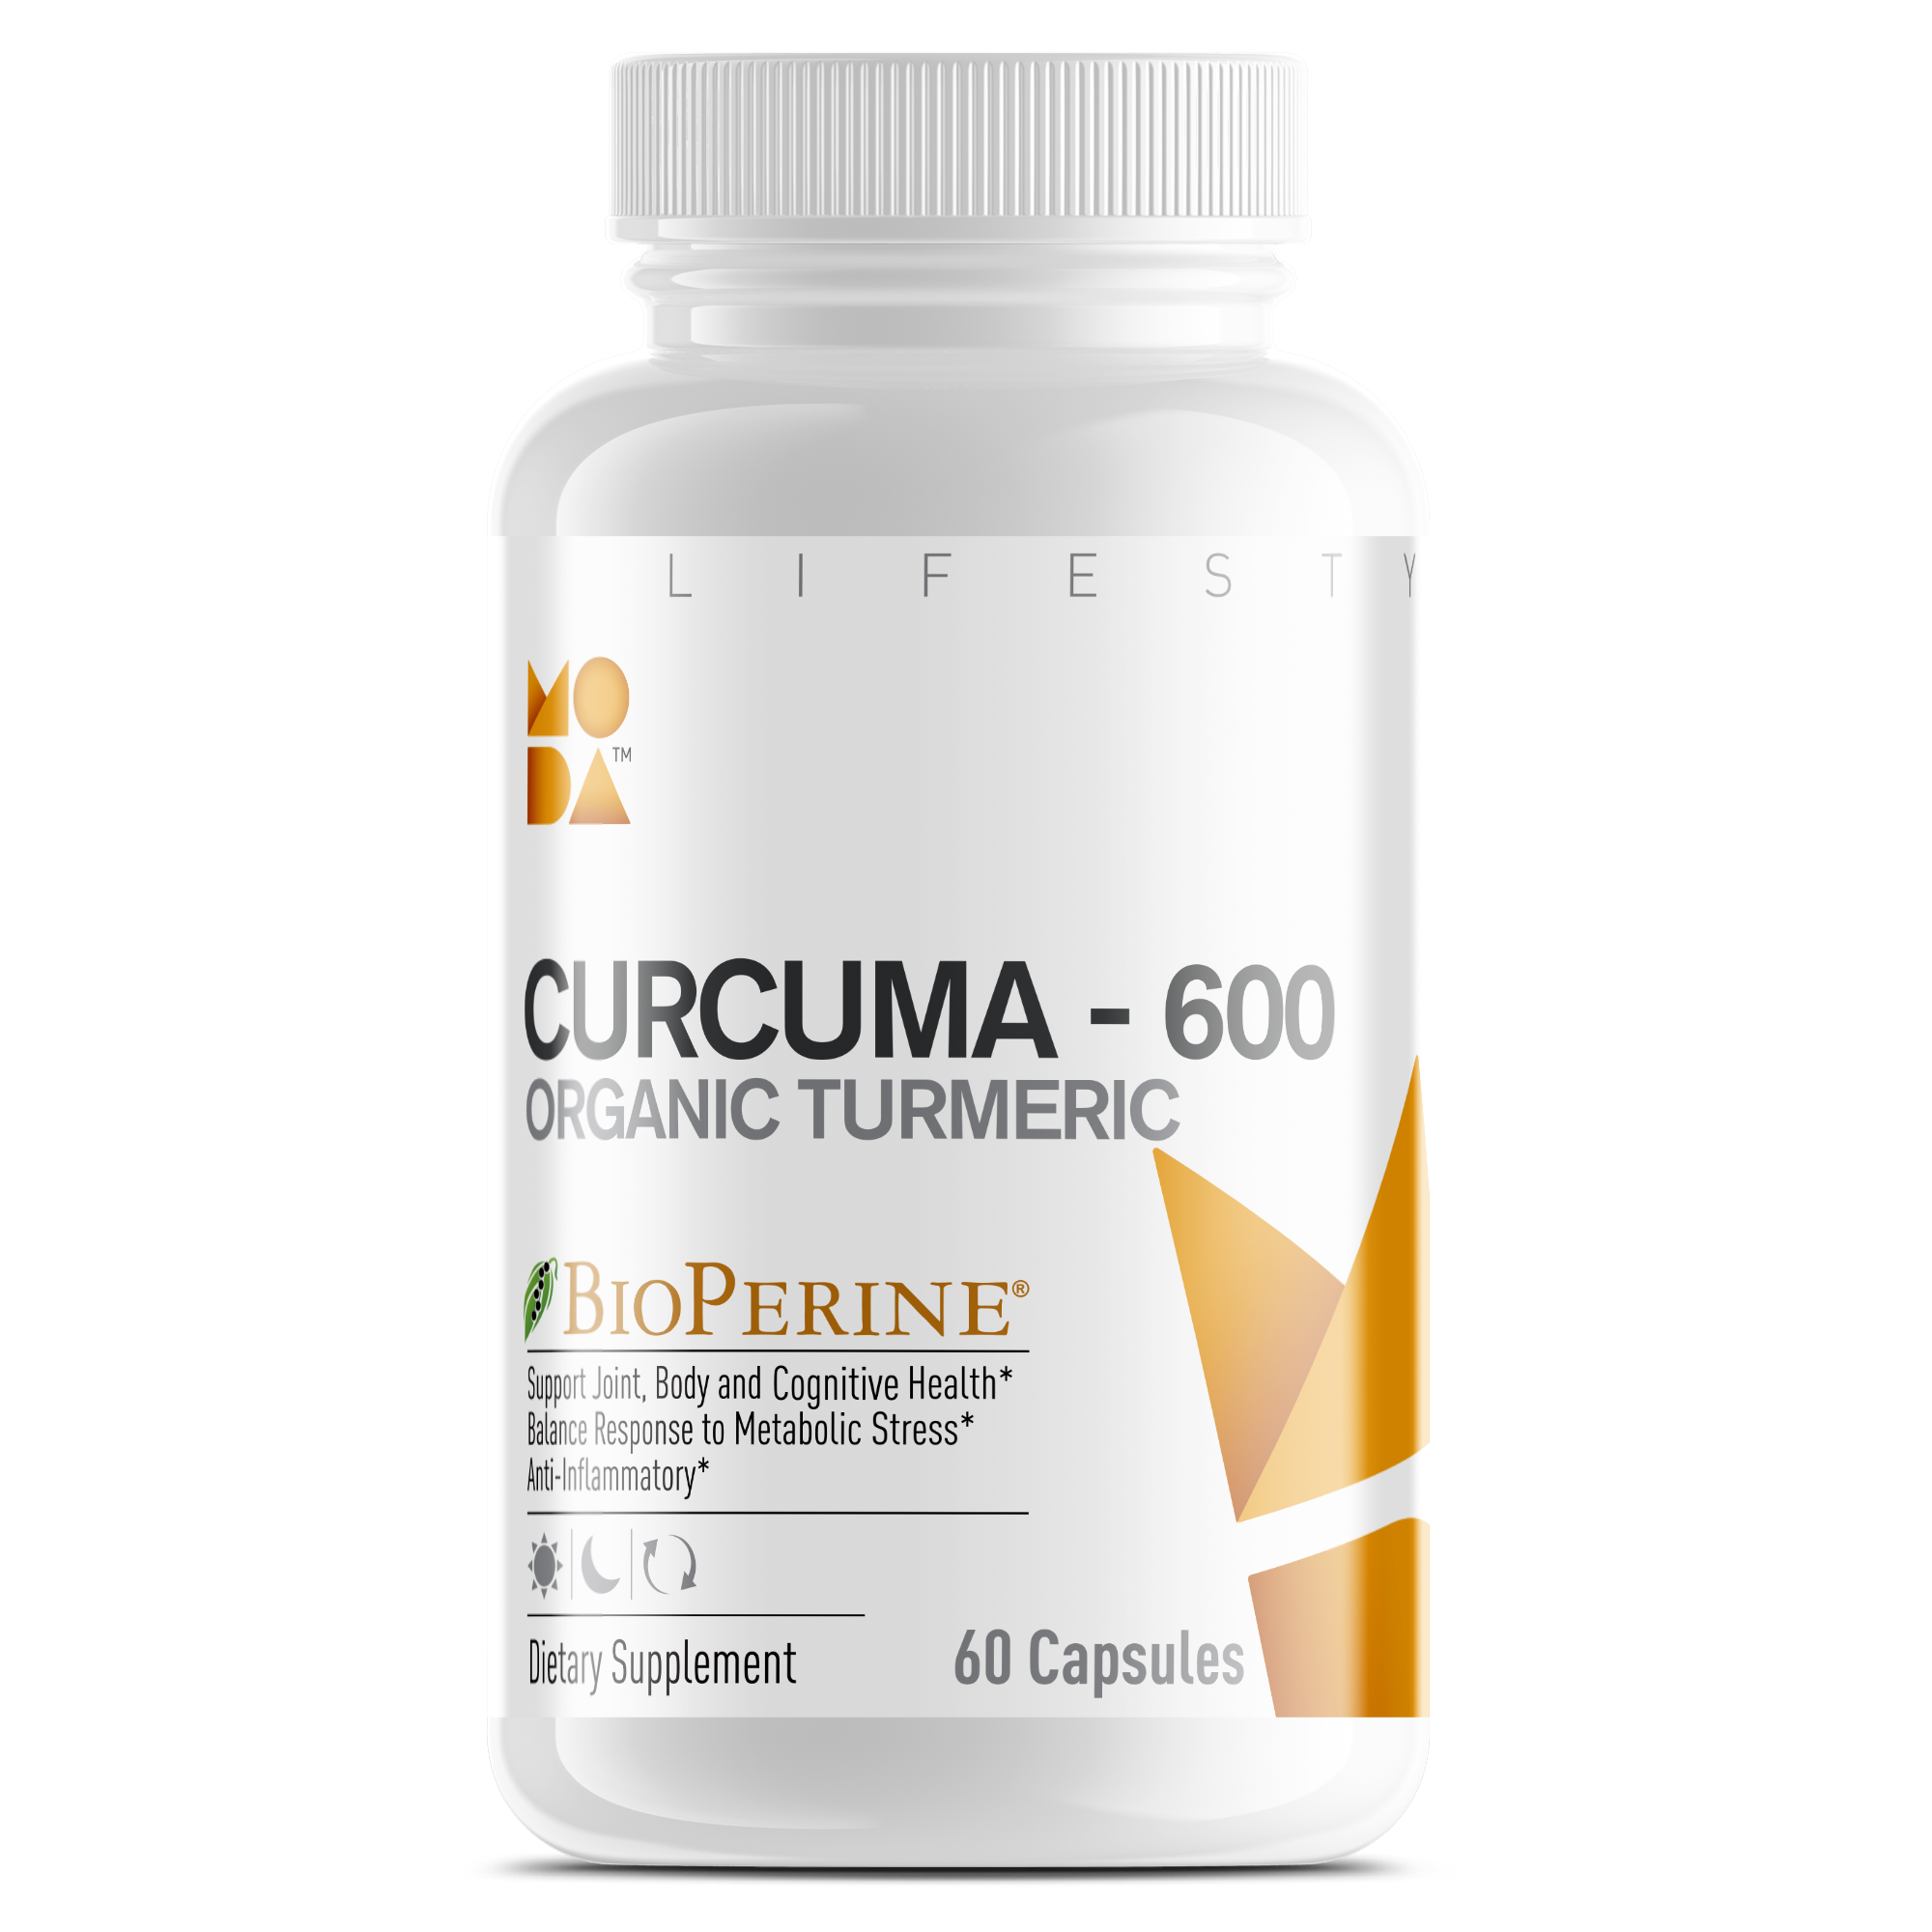 CURCUMA - 600 (Organic Turmeric - NSF Certified)